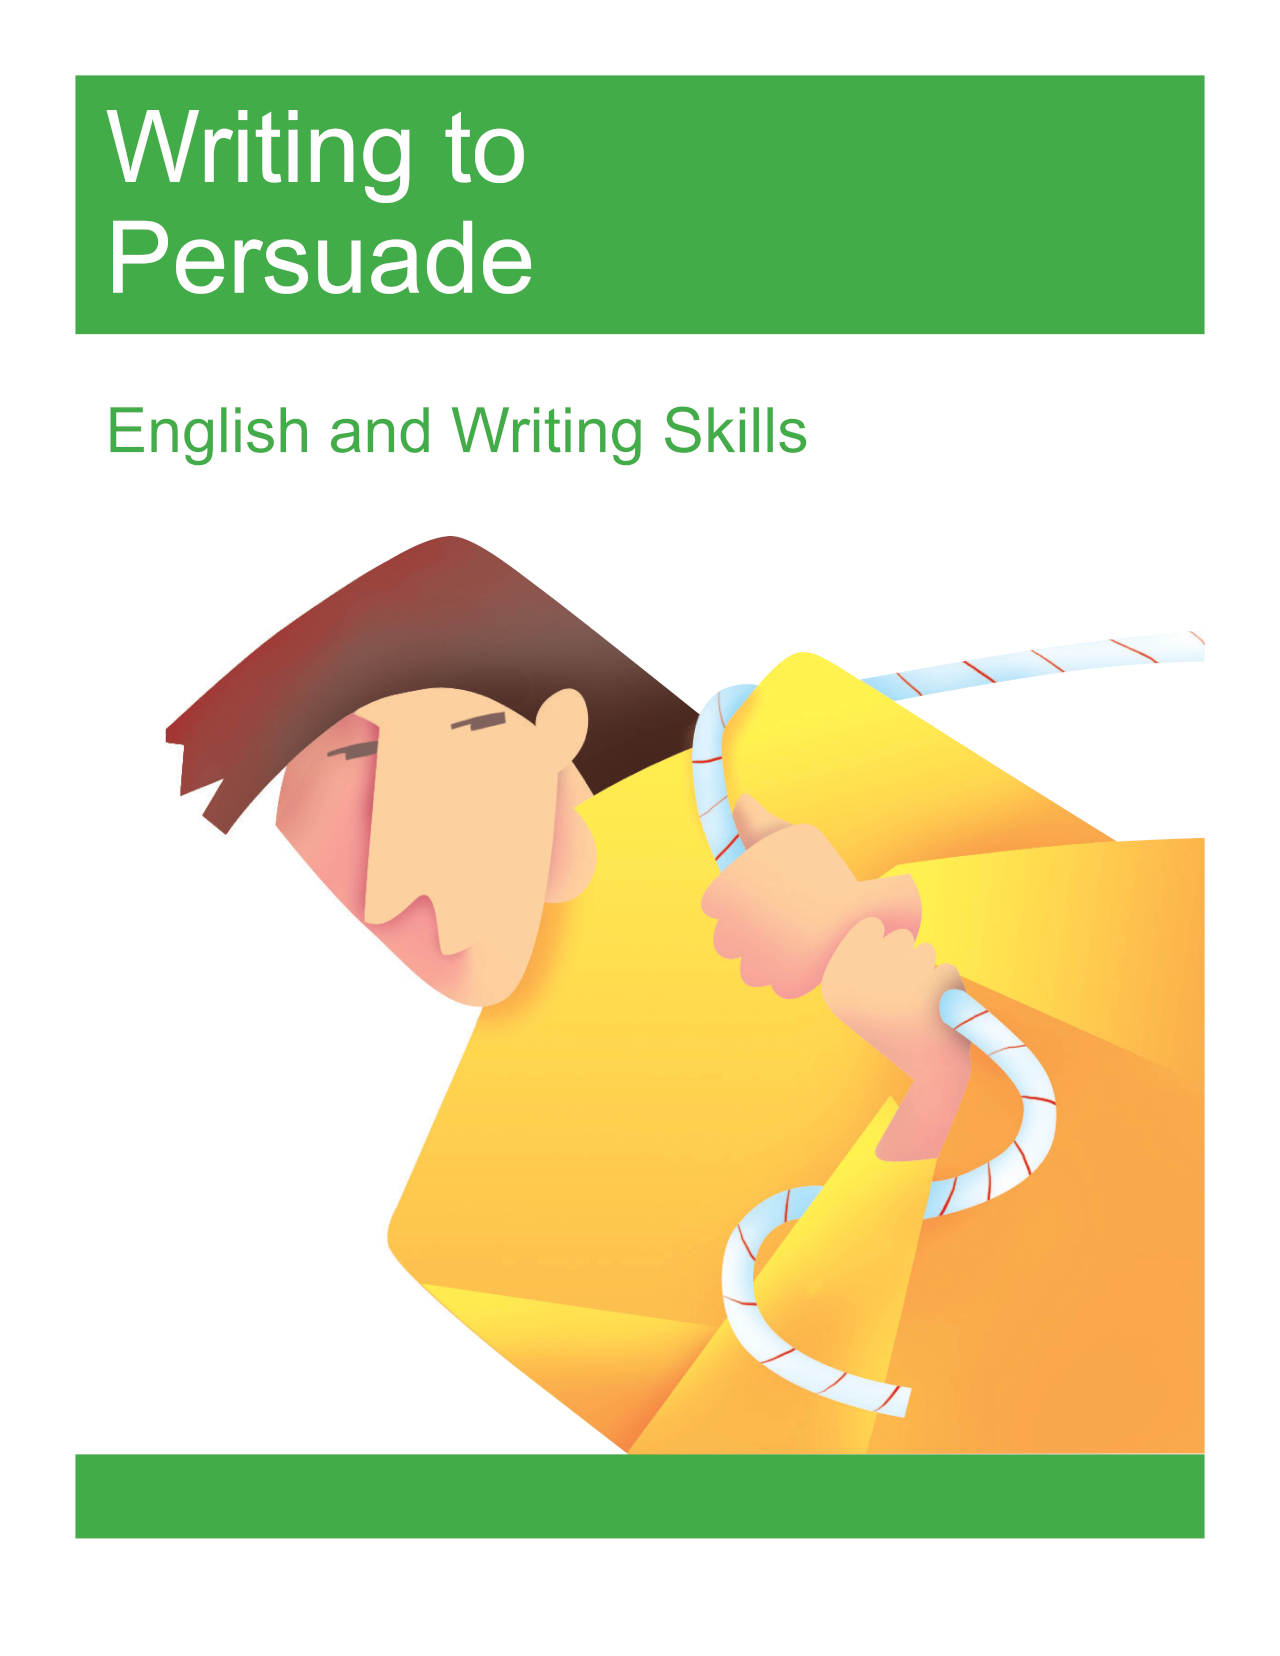 Writing to Persuade - Facilitator License